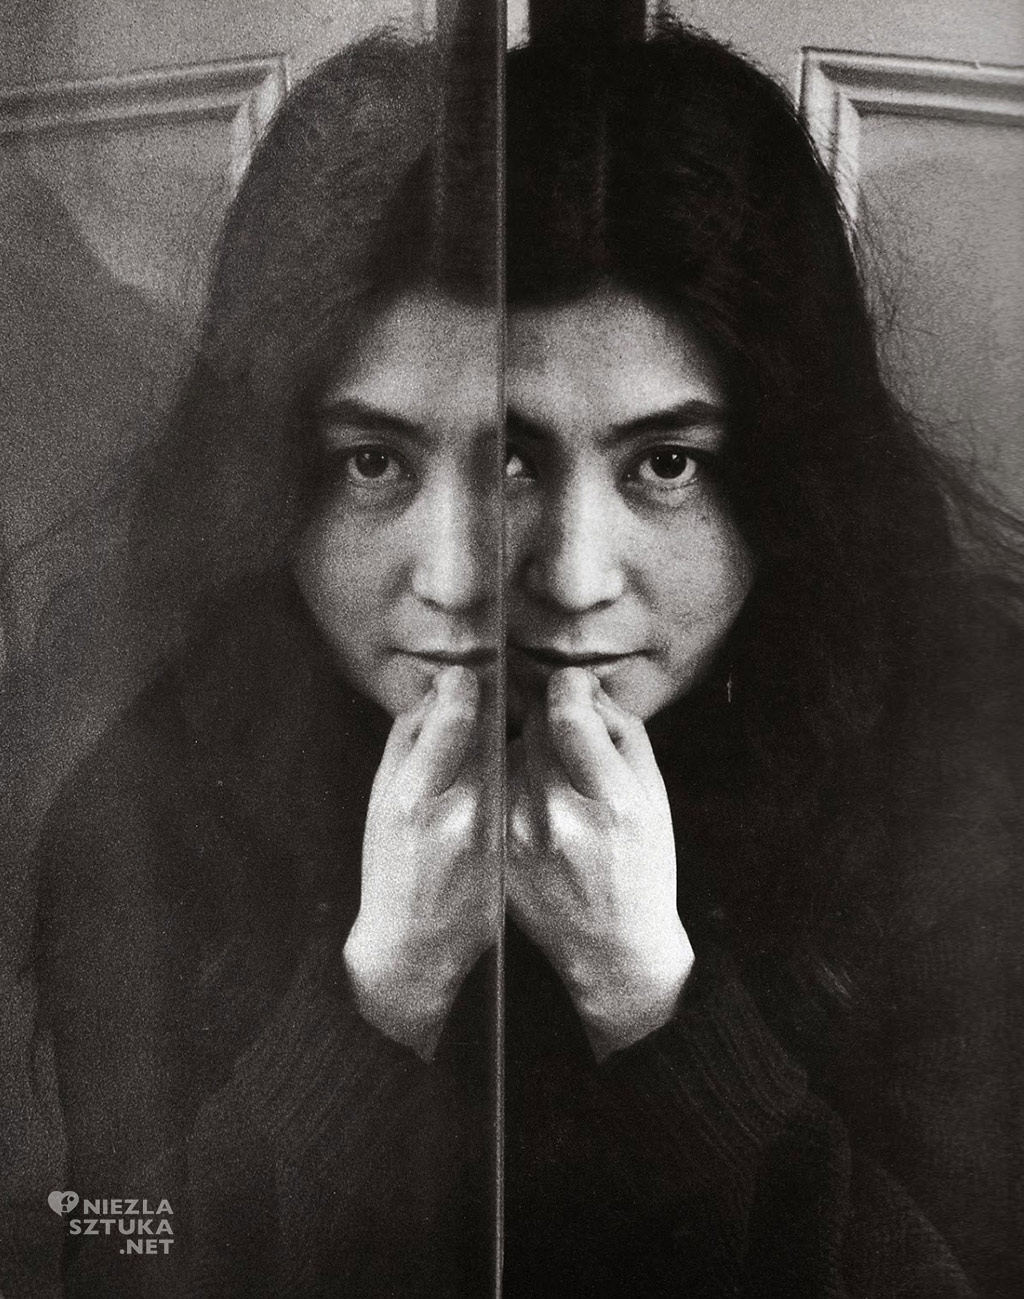 Yoko Ono, John Lennon, niezła sztuka